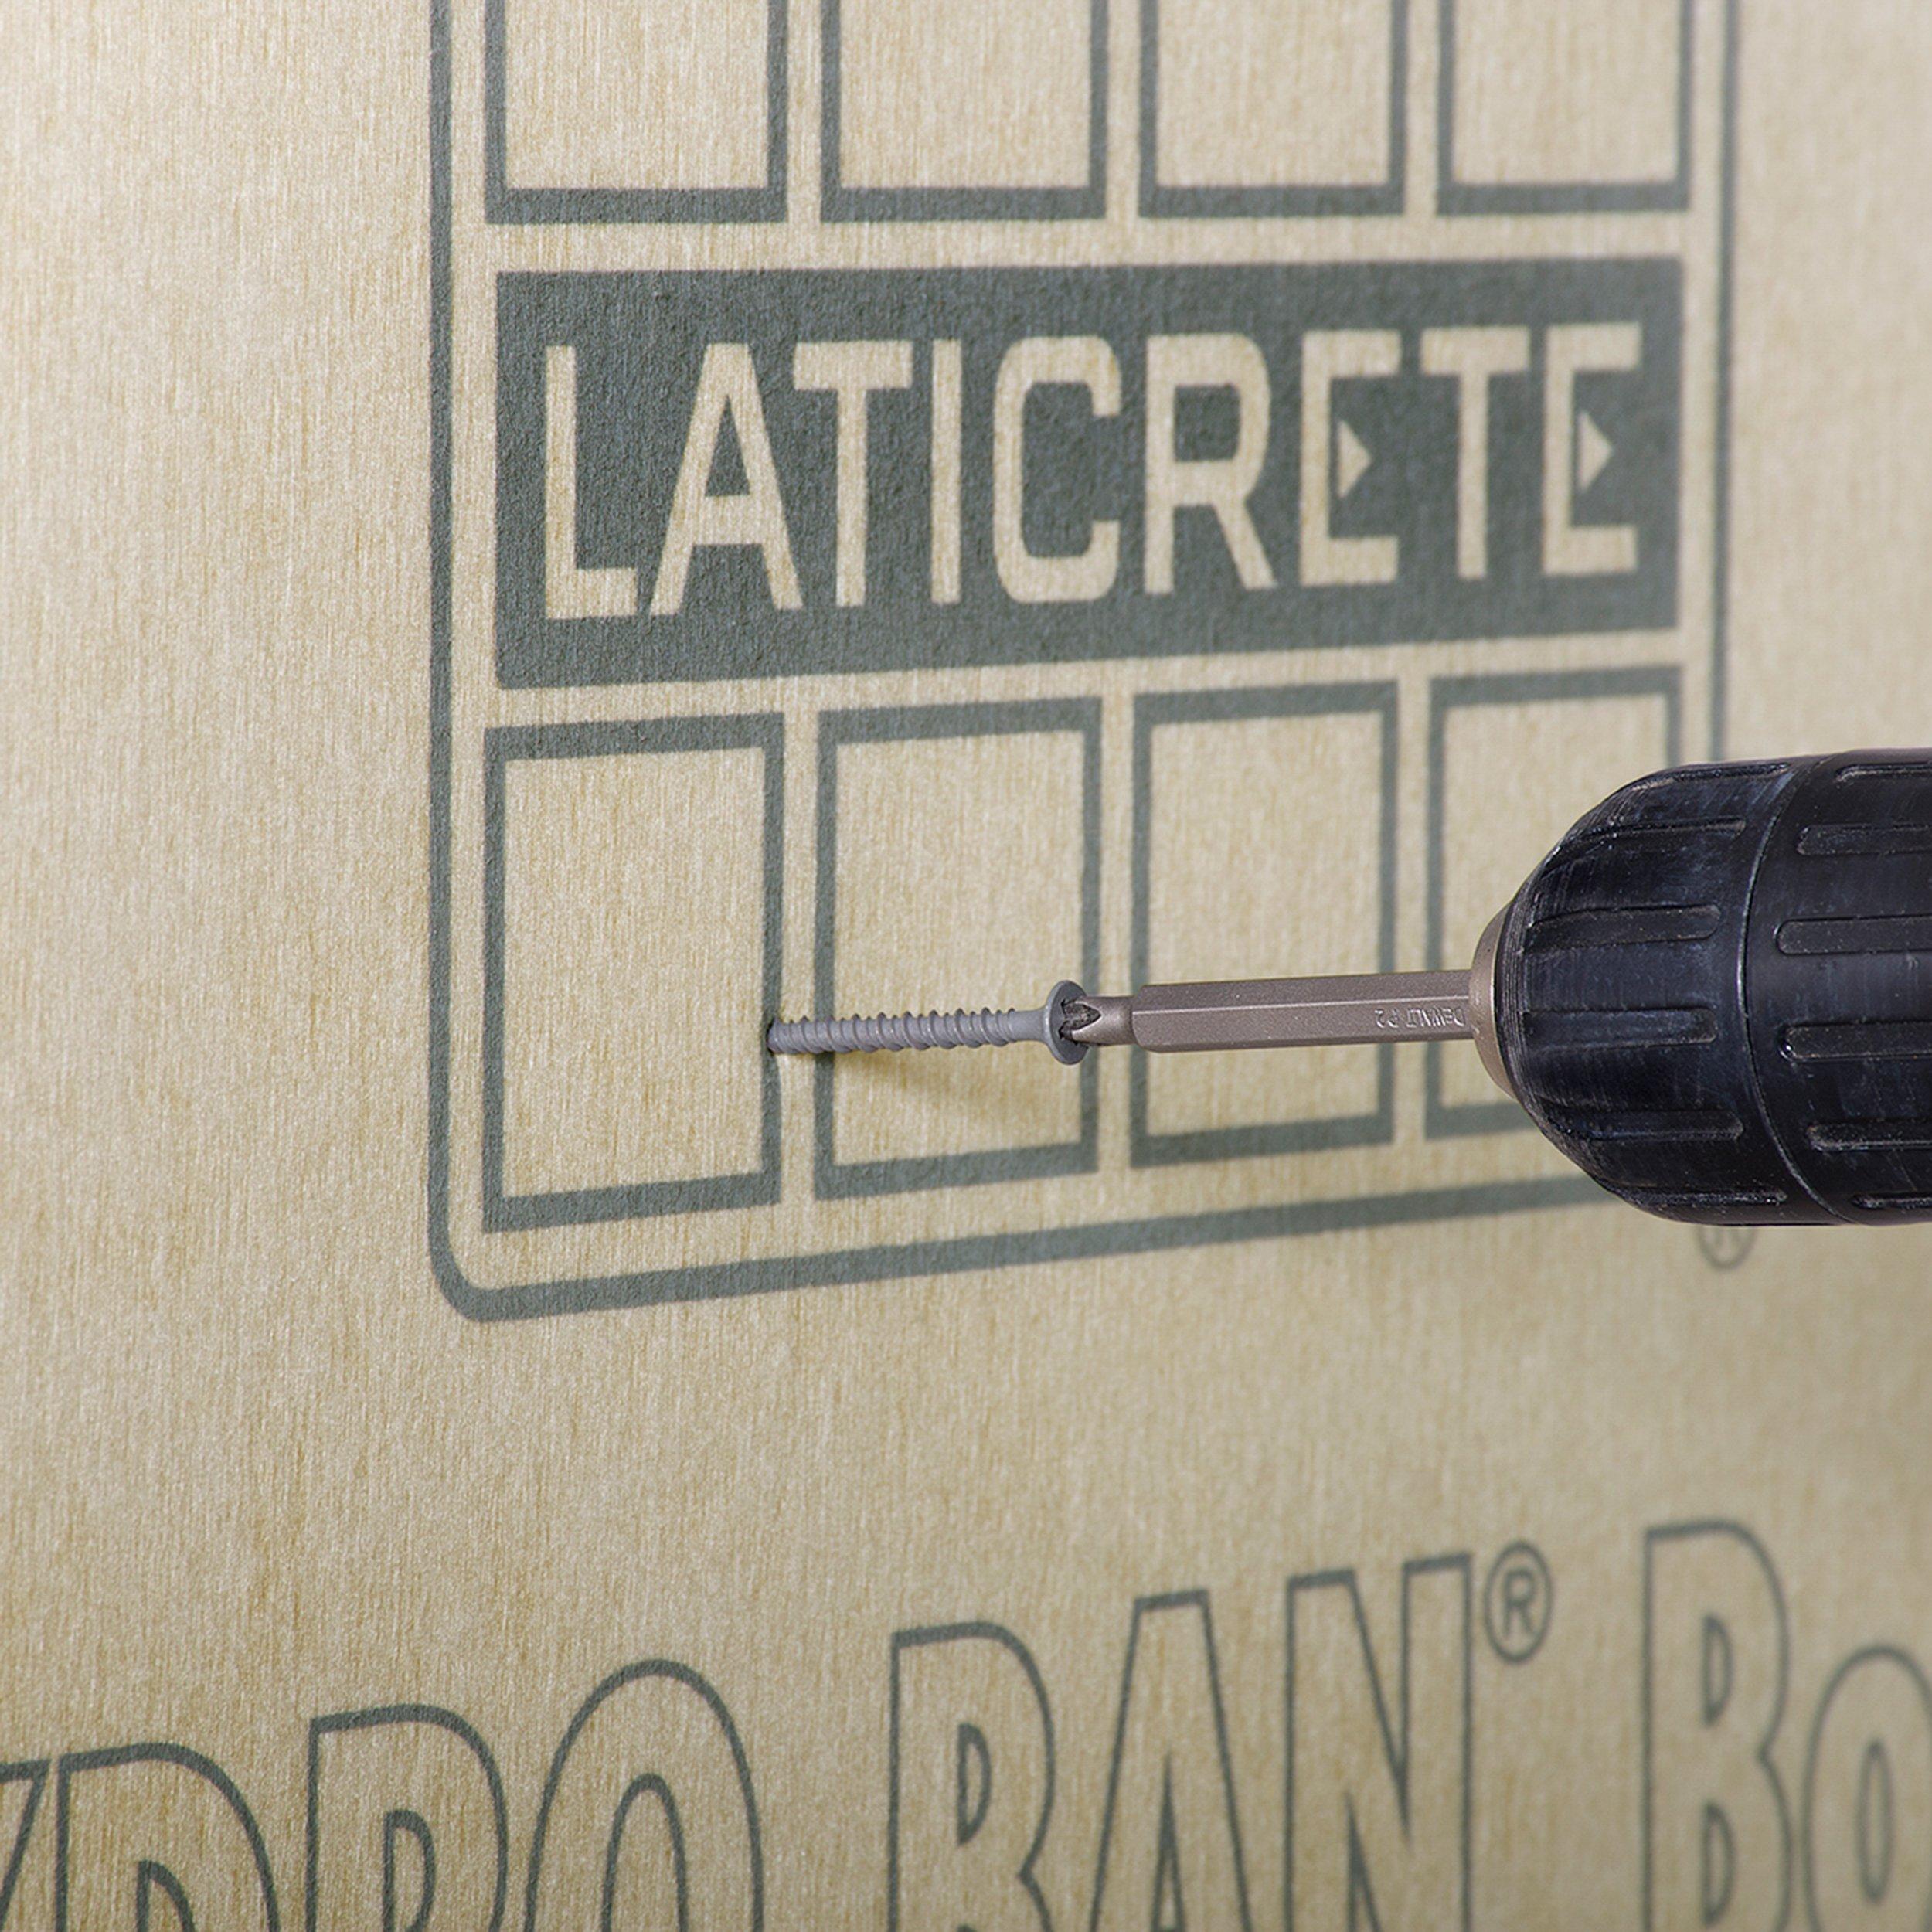 Laticrete Hydro Ban Board Screws 1-5/8in. - 250ct.